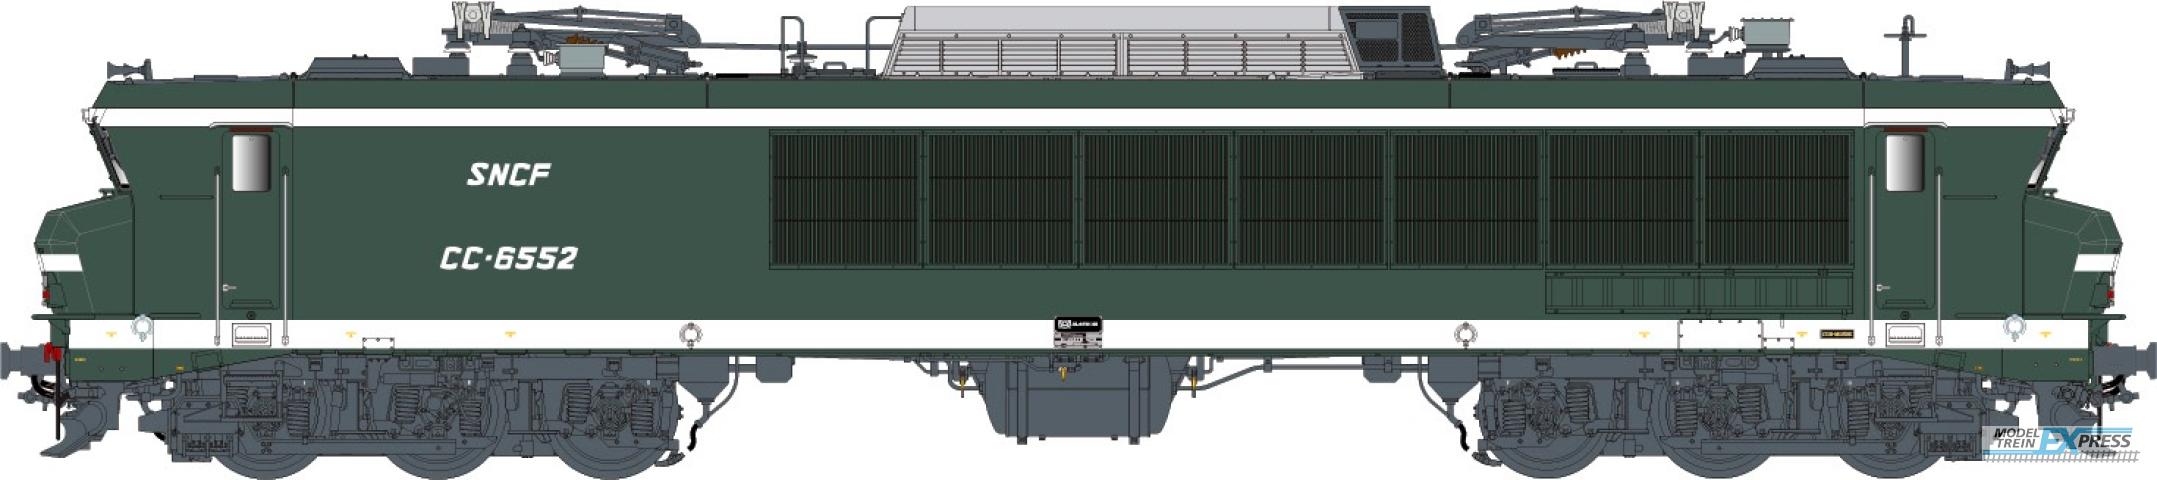 LS Models 10315S CC 6552, Maurienne-livrei, gemoderniseerde buffers, depot Lyon-Mouche / Ep. IV / SNCF / HO / DC SOUND / 1 P.